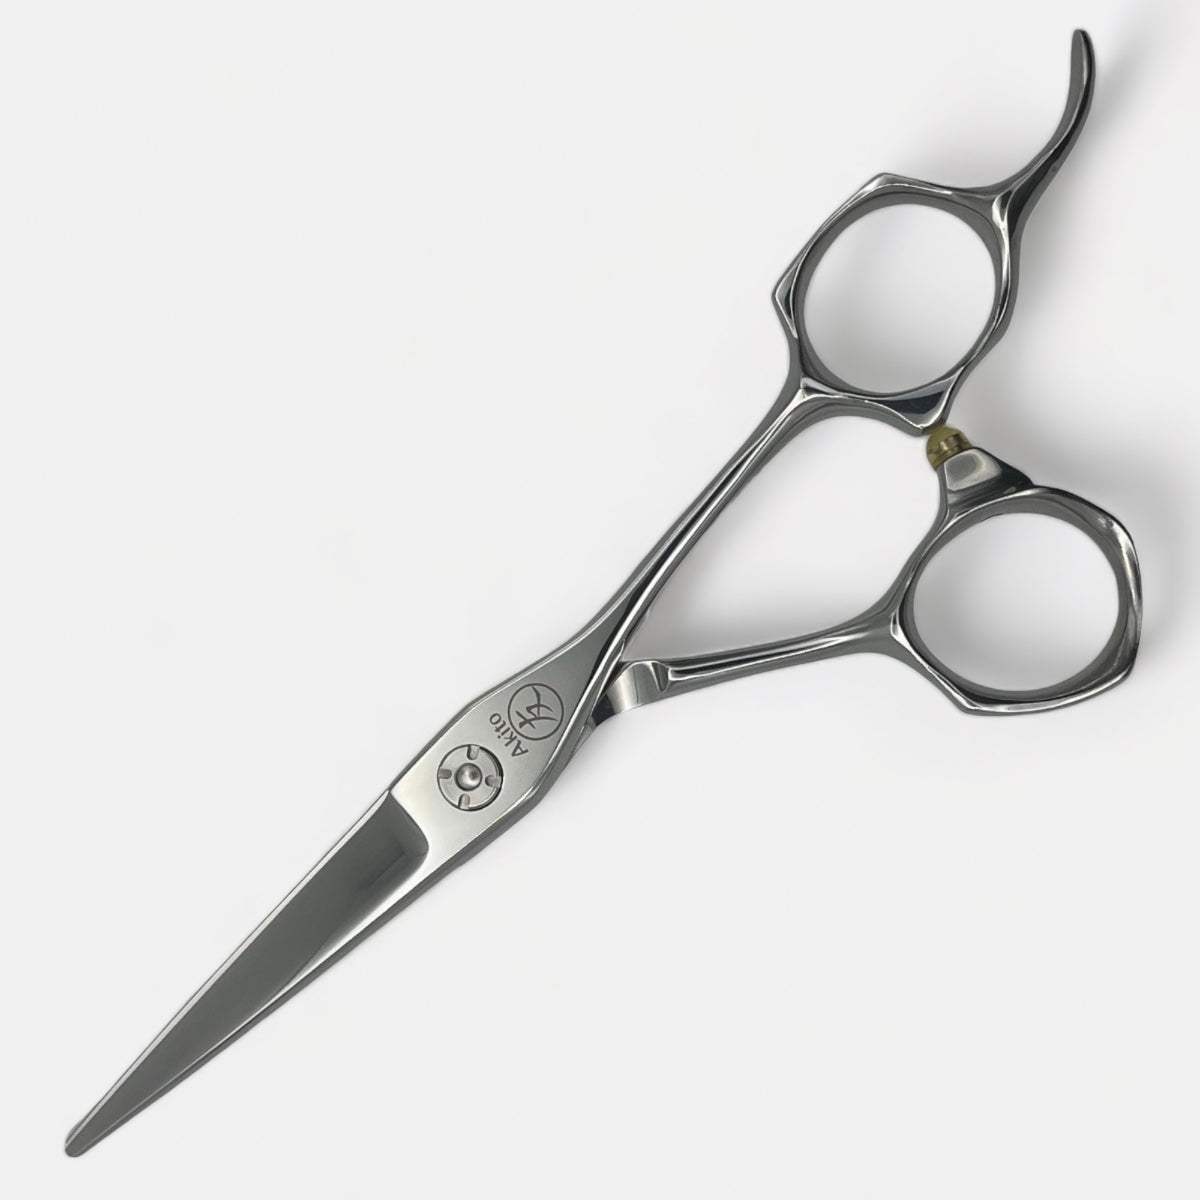 Okami Hairdresser Scissors